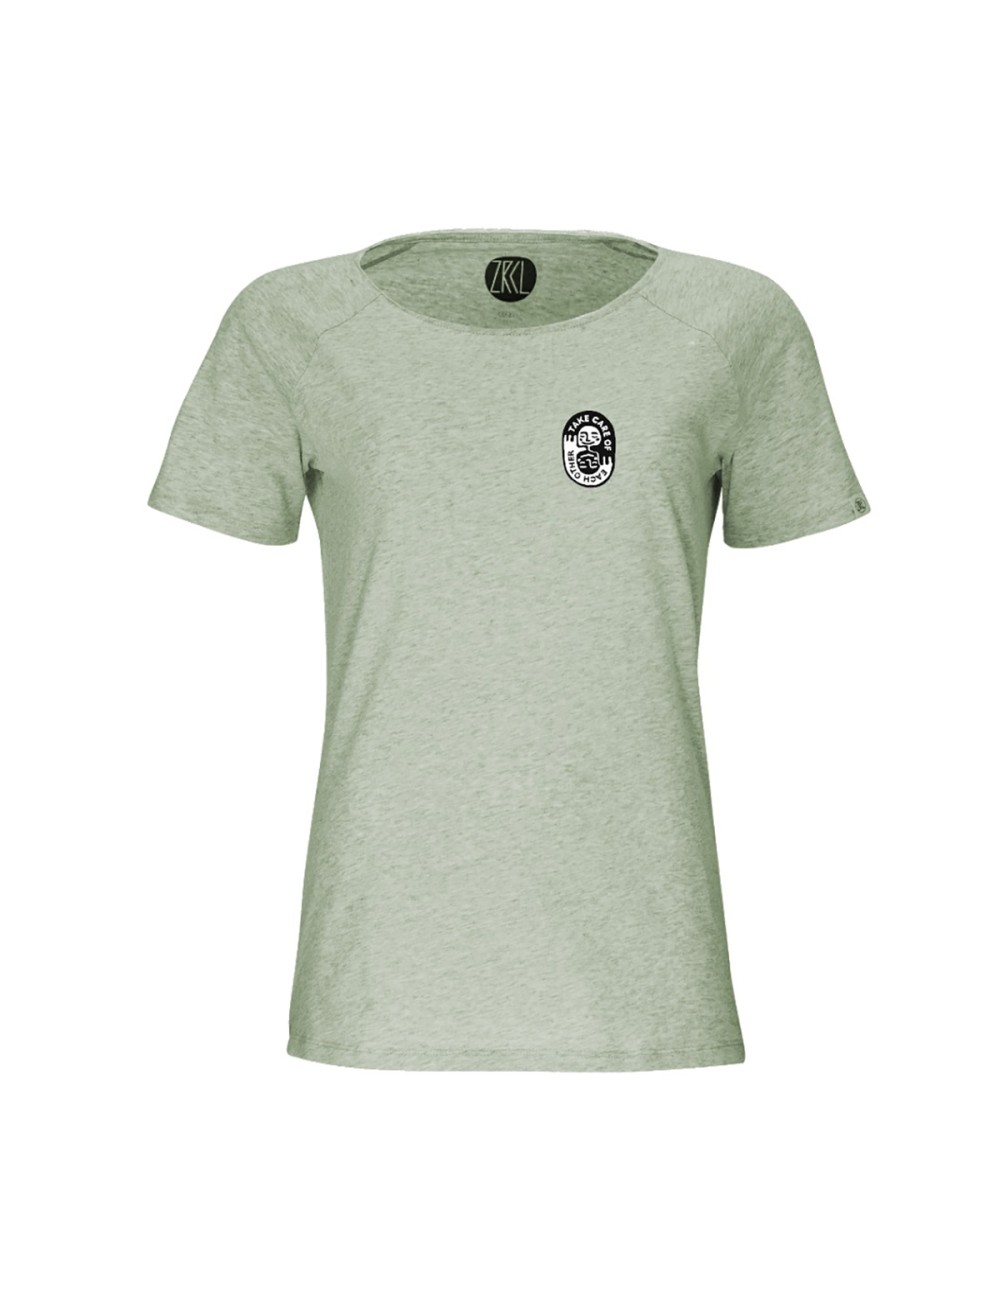 ZRCL Wms T-Shirt Take Care - Silver Green